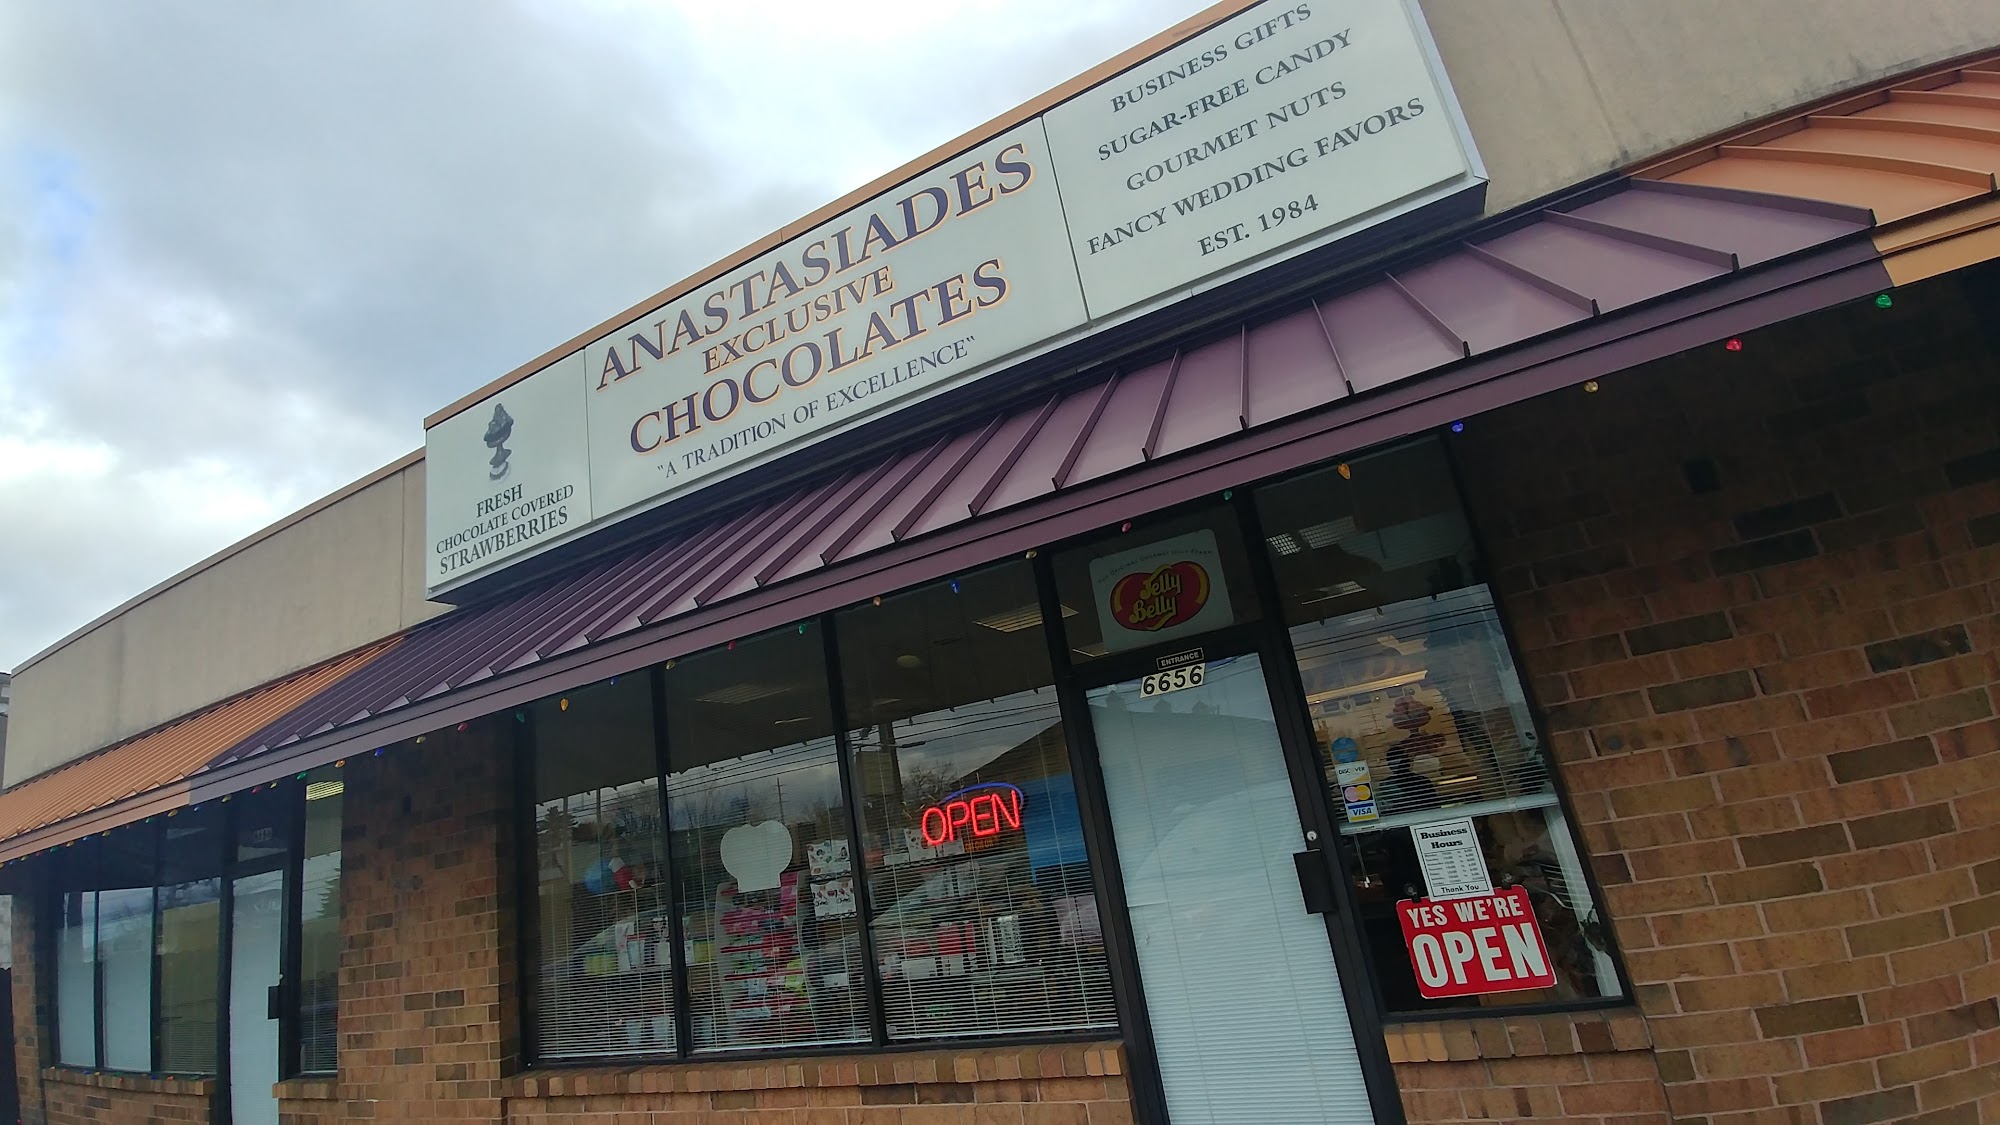 Anastasiades Exclusive Chocolates